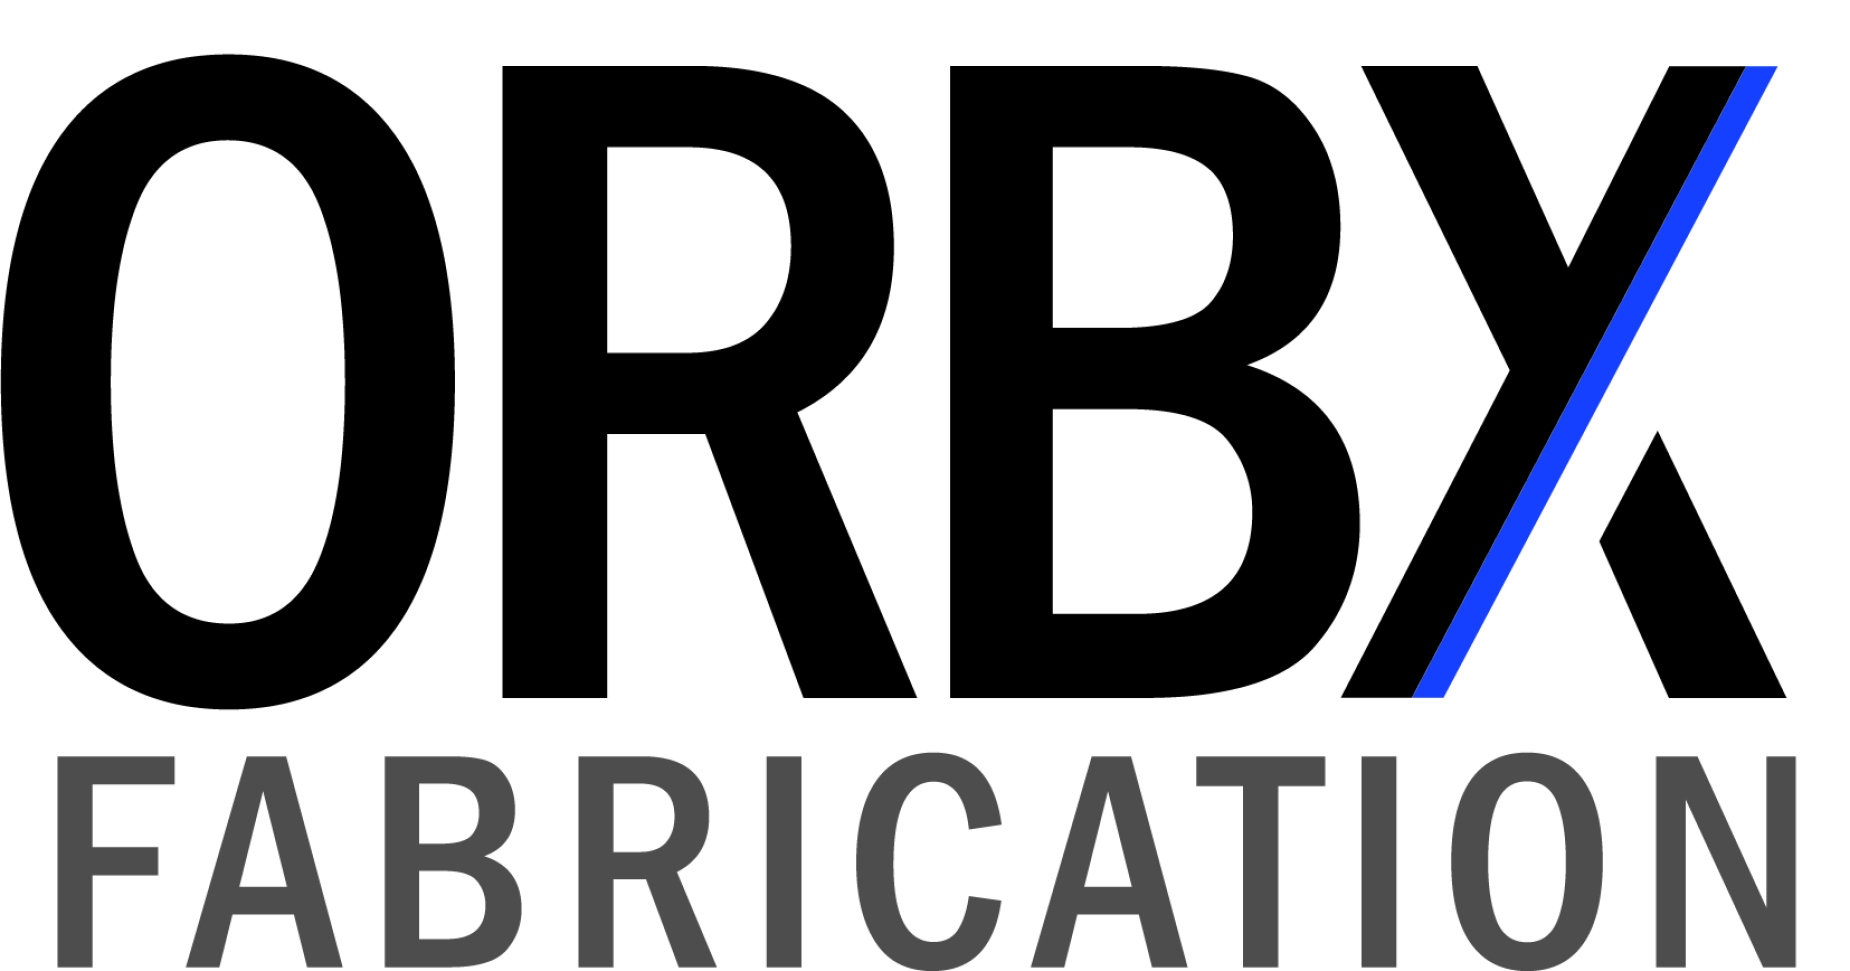 ORBX Fabrication